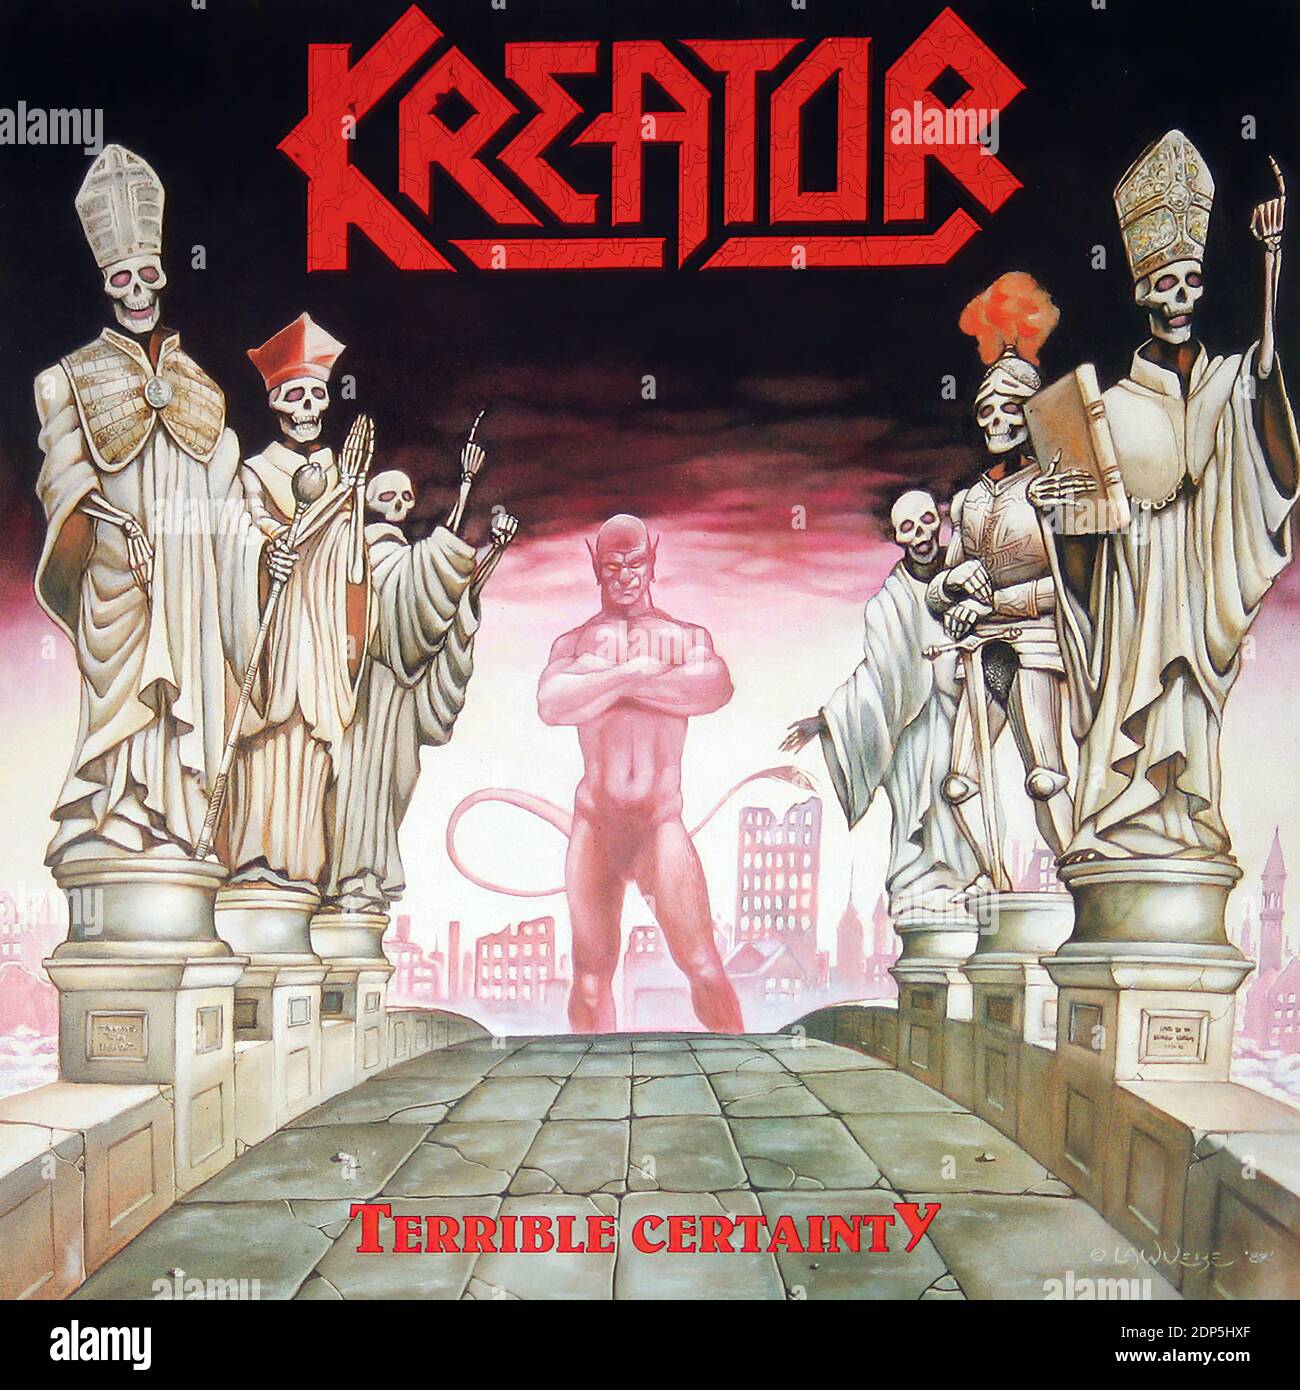 Kreator Terrible Certainty 05 - Vintage Vinyl Record Cover Stock Photo